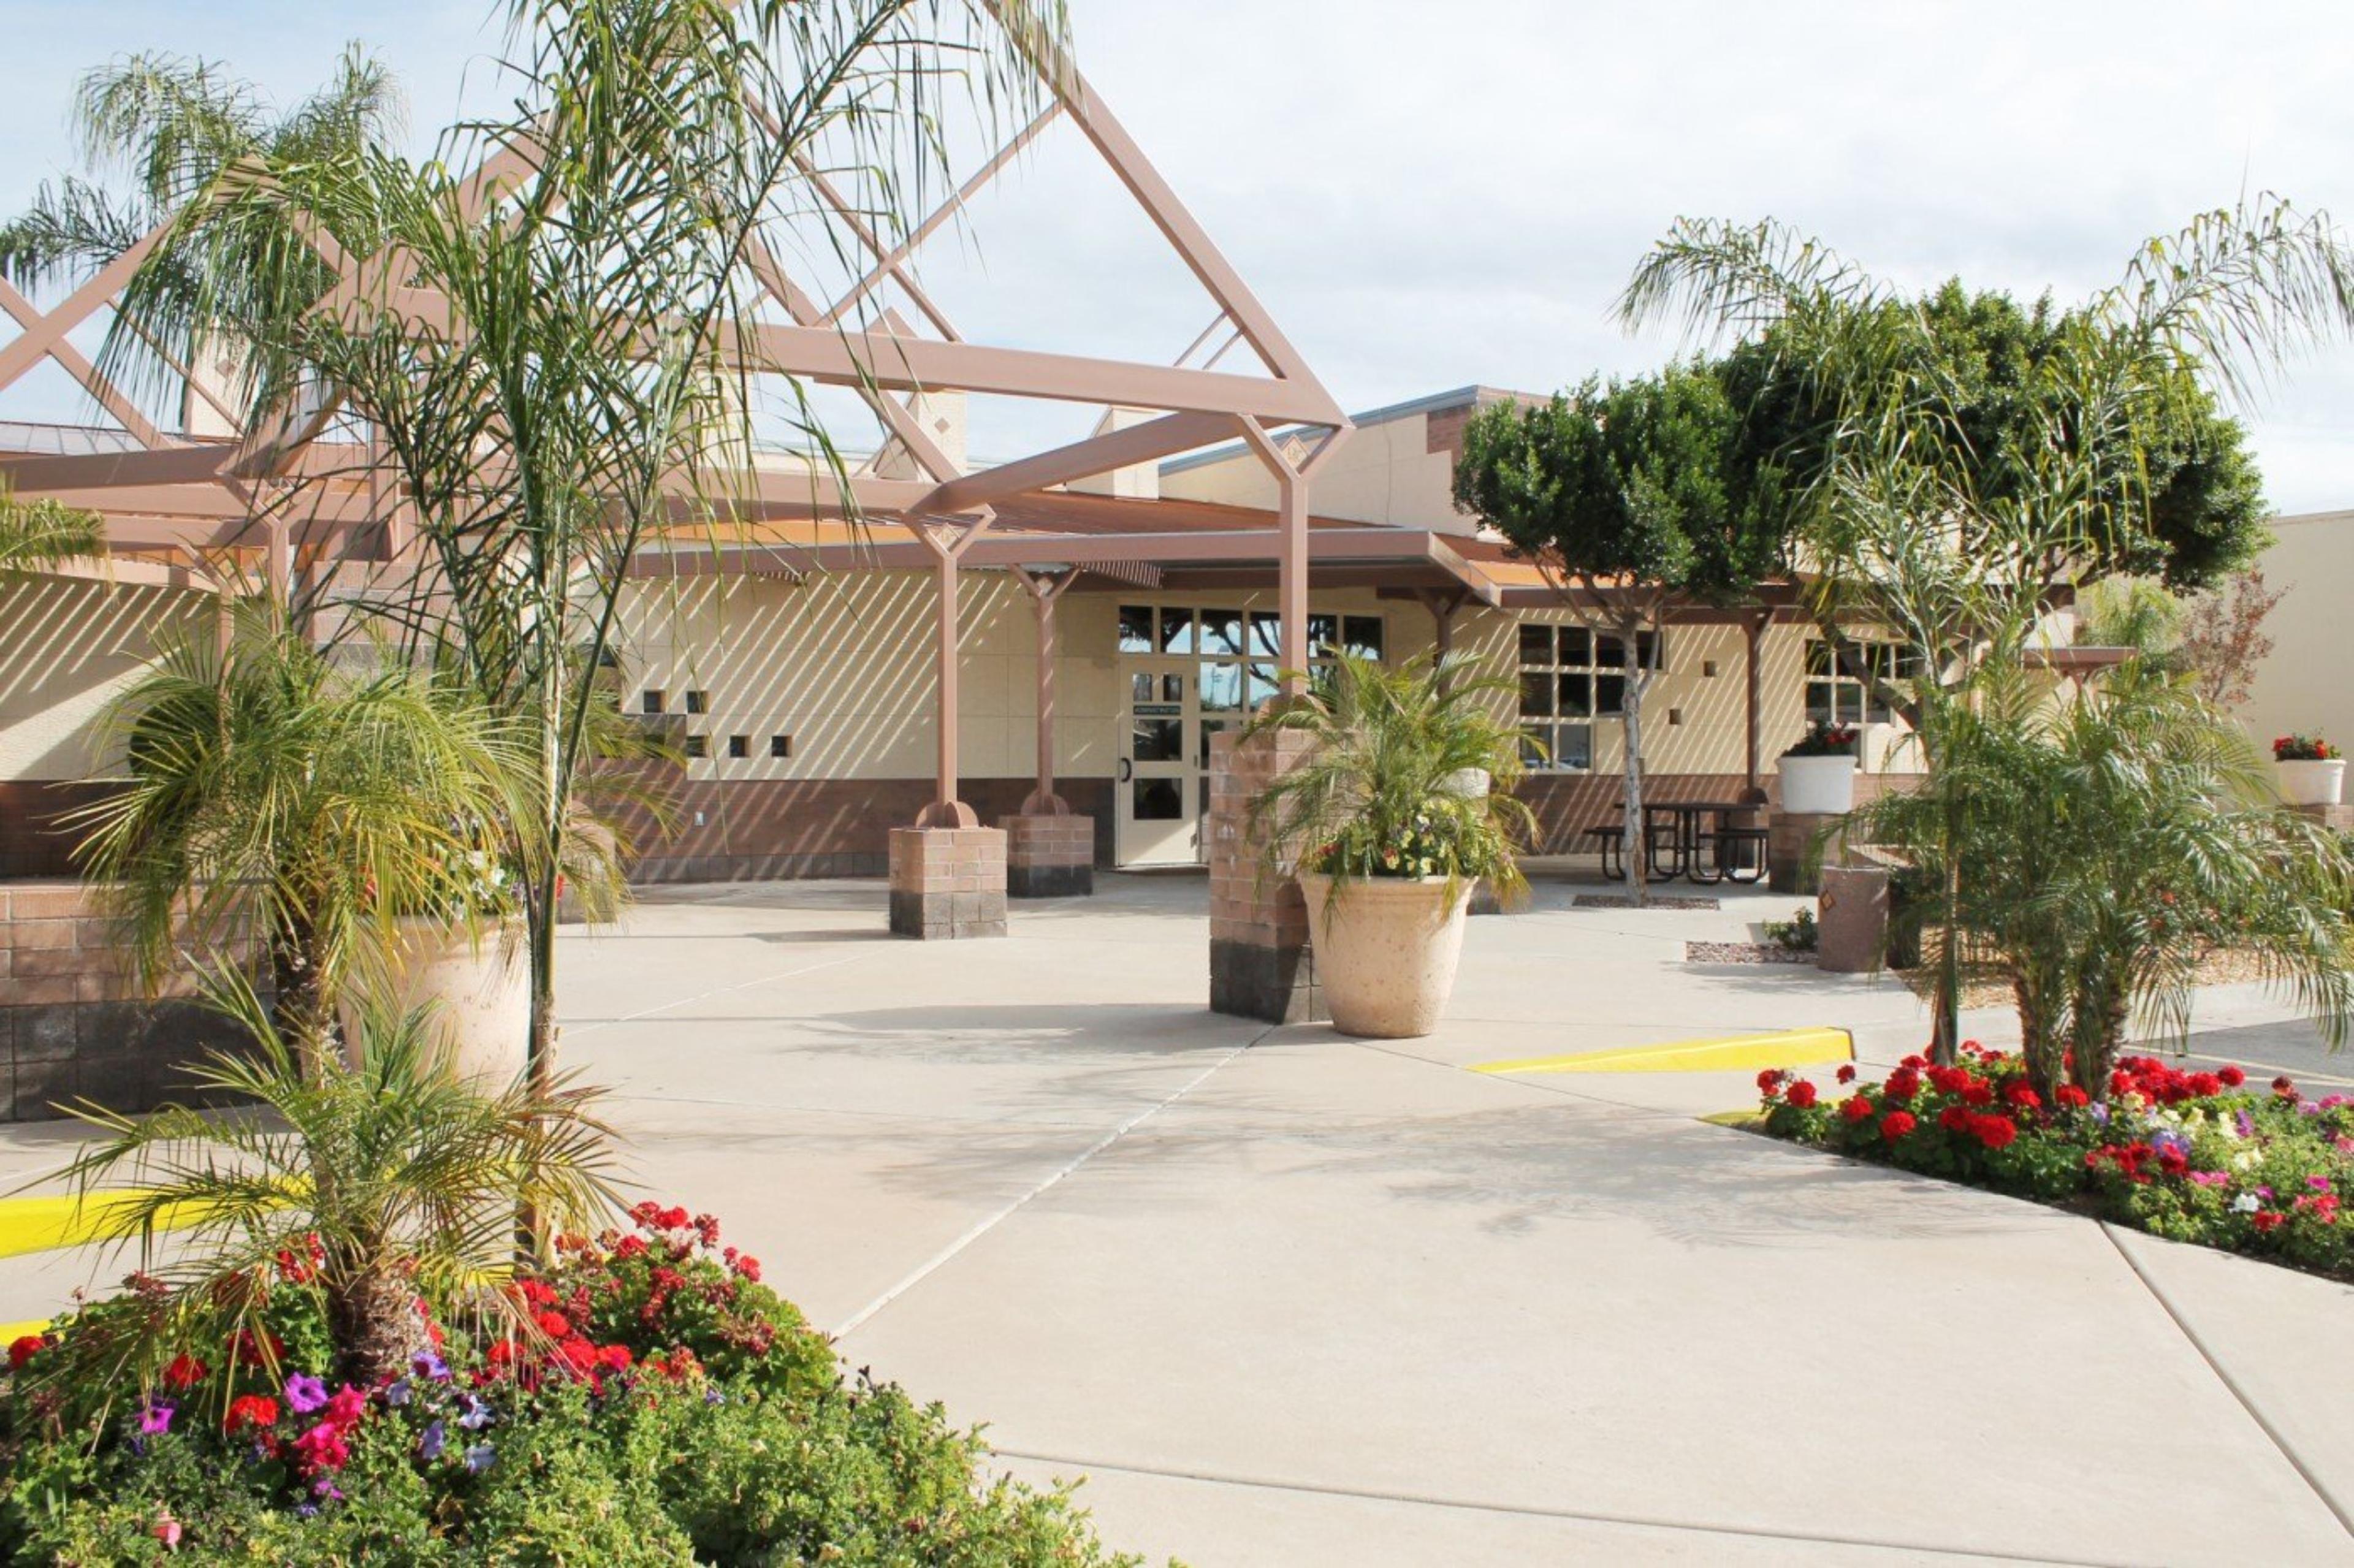 La Casita Recreation Center - Dobson Ranch